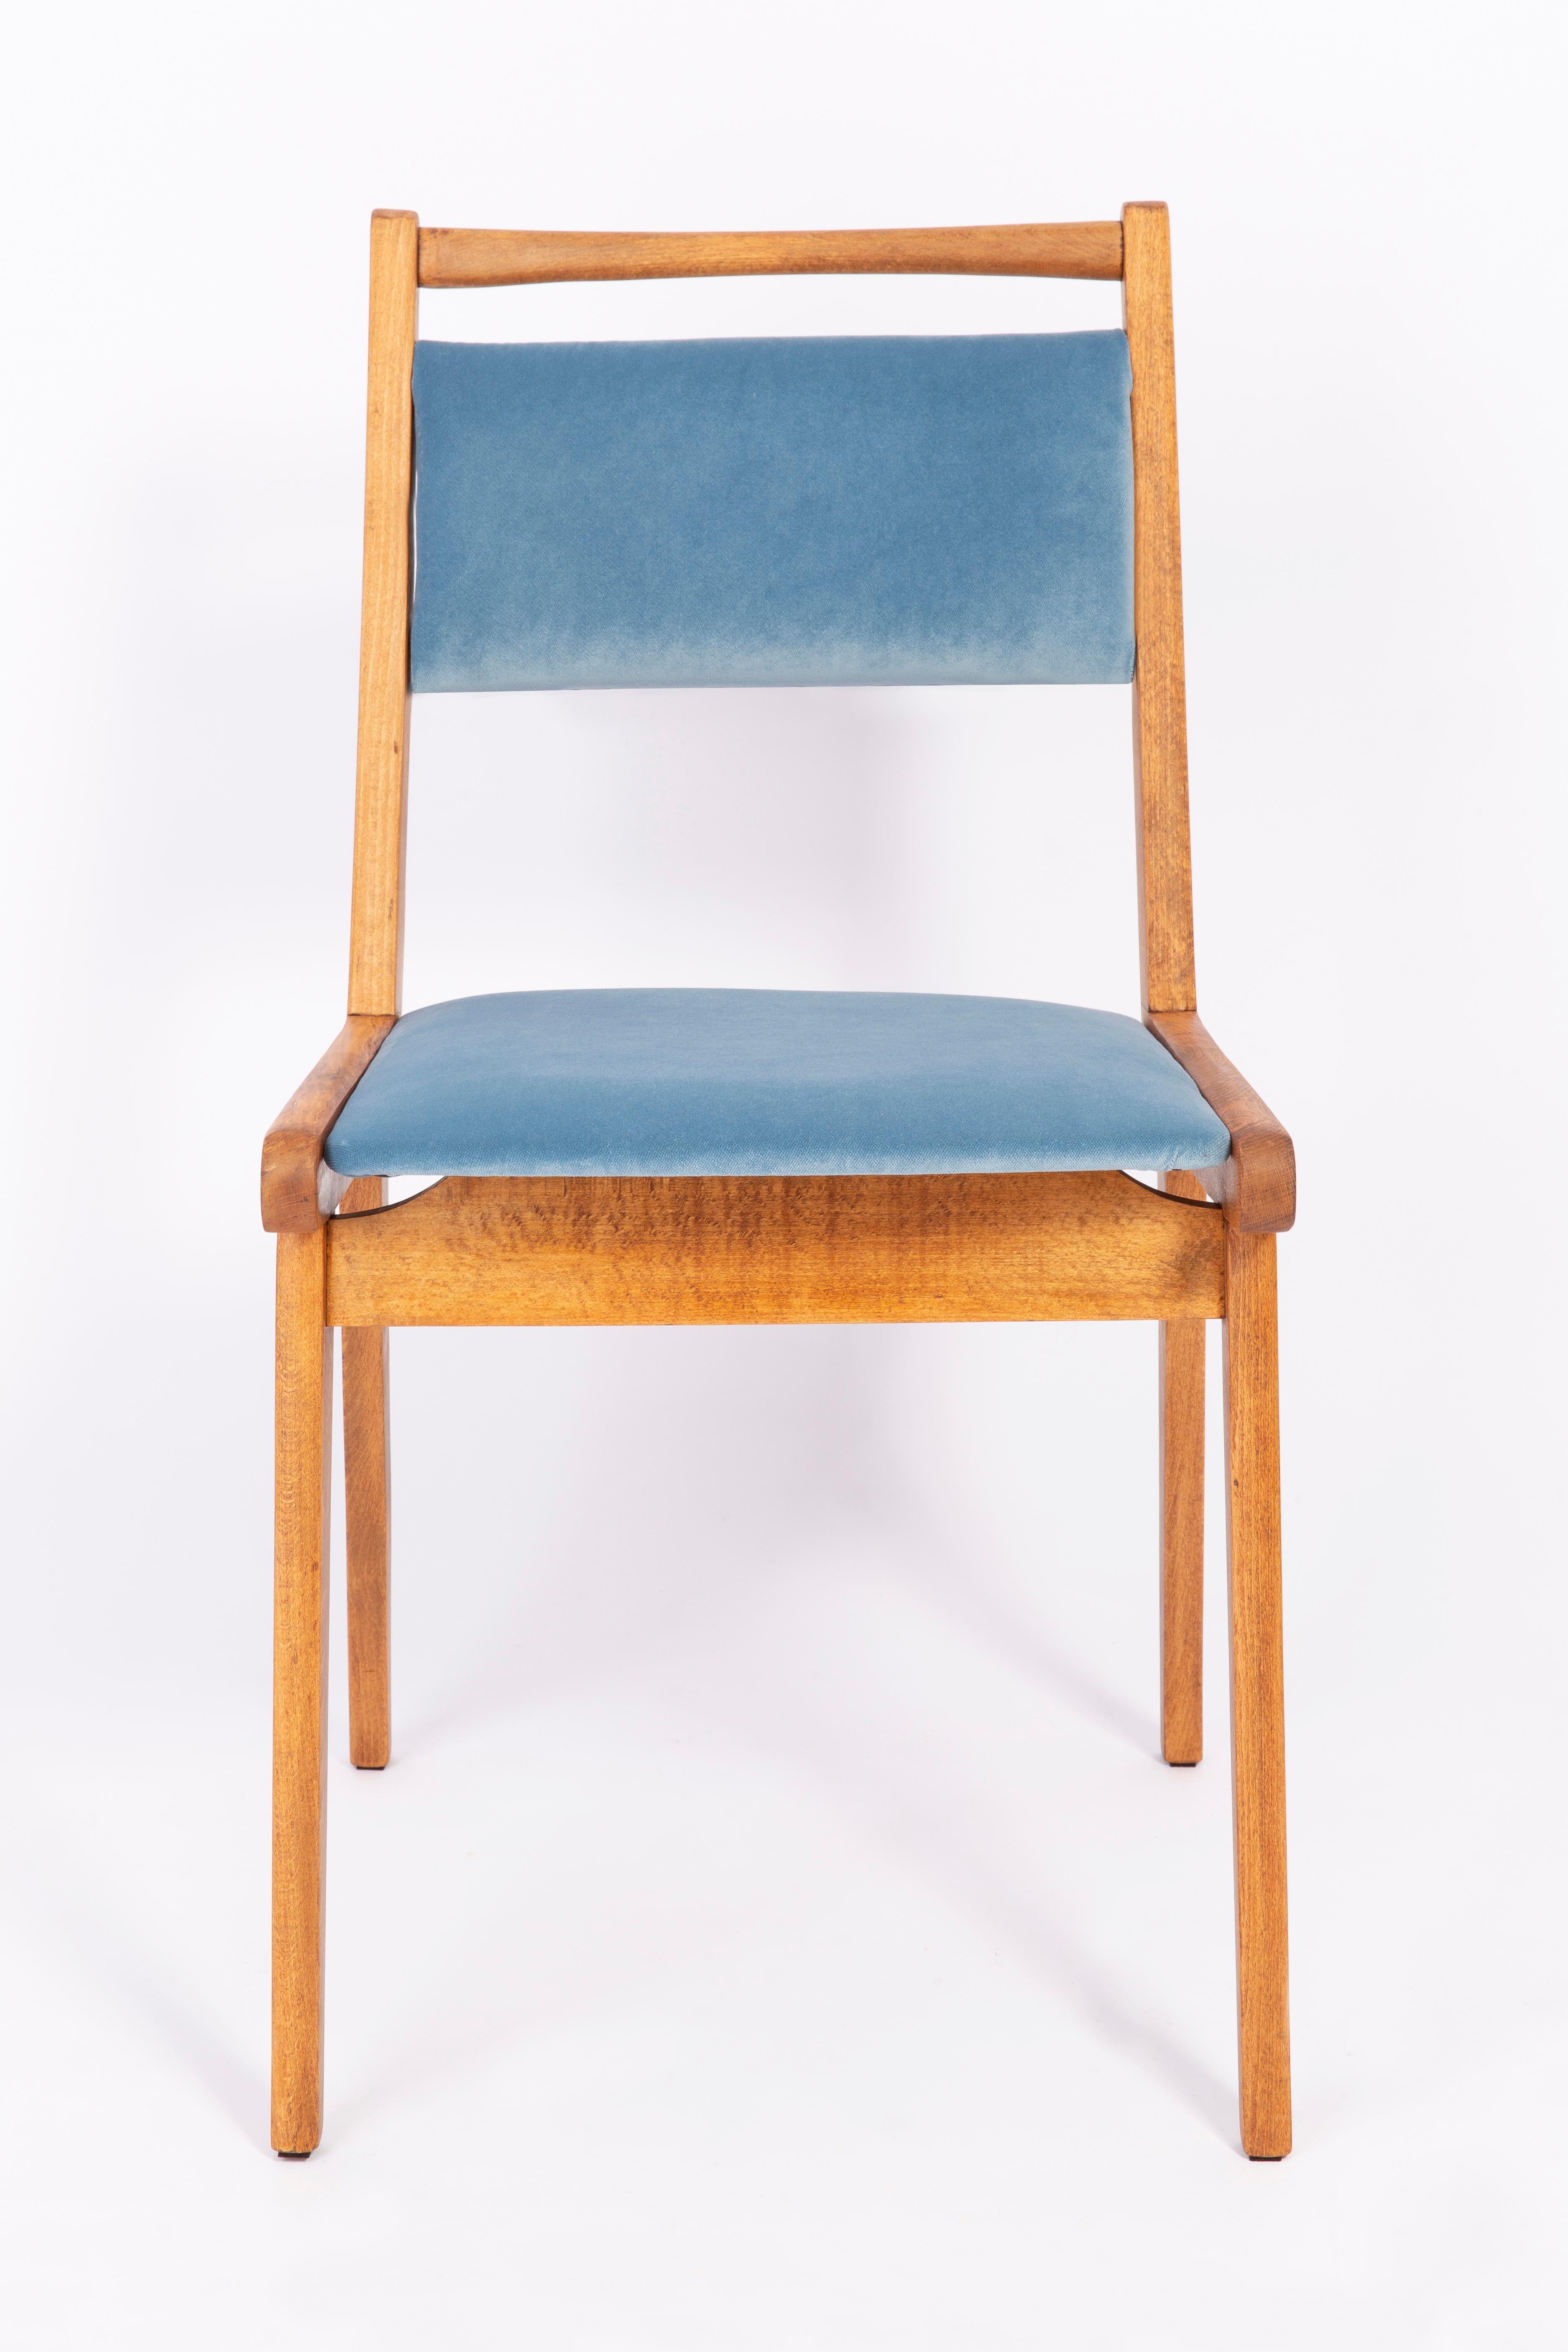 Set of Twelve 20th Century Blue Velvet Chairs, Poland, 1960s For Sale 1